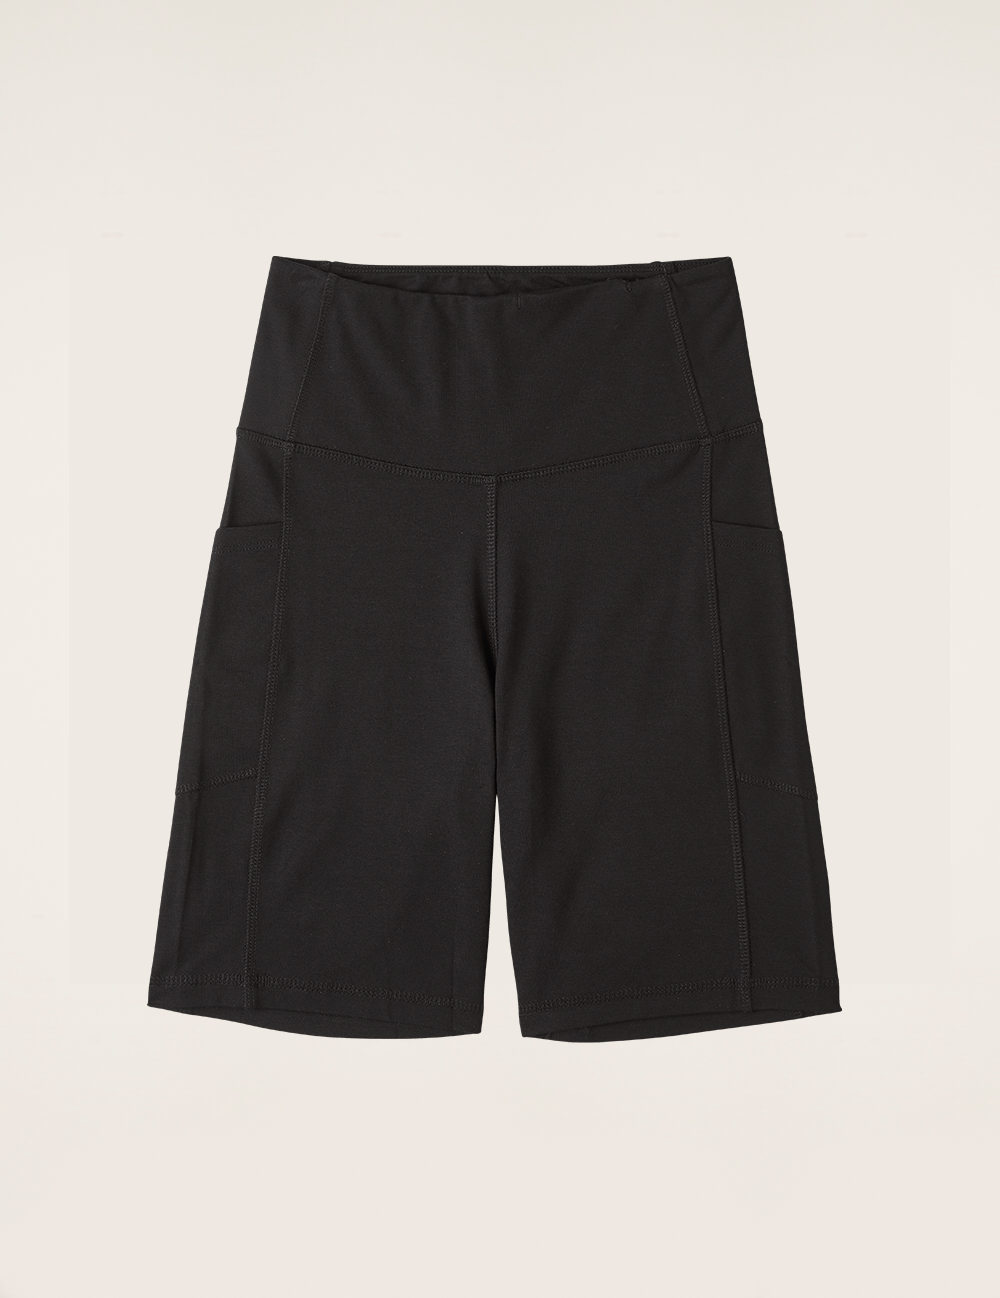 Motivate 8 High-Waist Shorts, Black